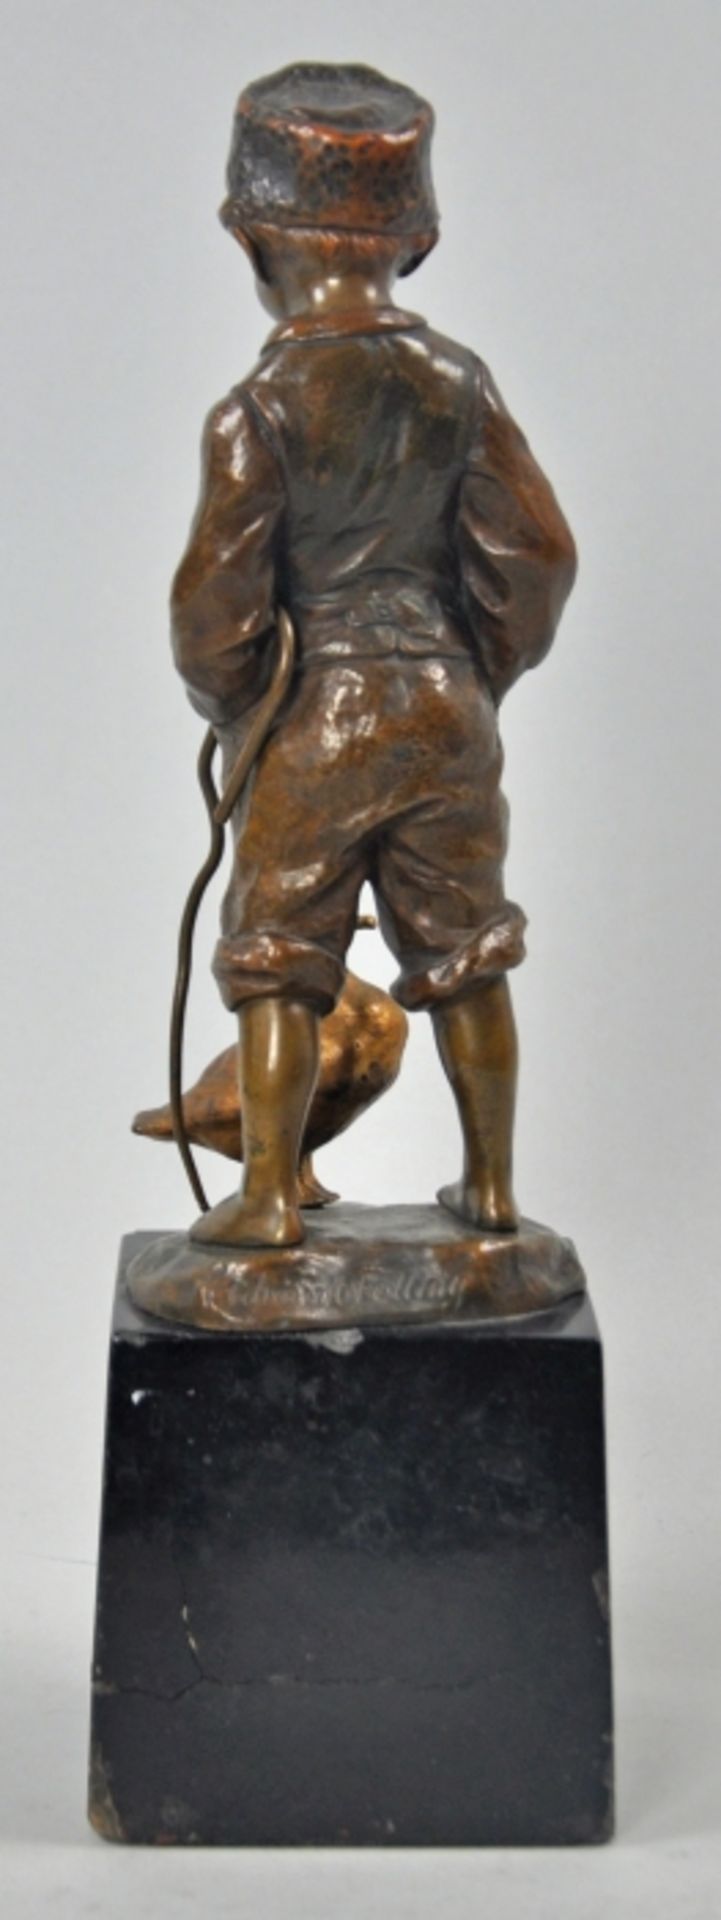 SCHMIDT-FELLING Julius Paul (1835 Berlin - 1920) "Gänsehirte", Junge mit Händen in den Taschen, - Image 3 of 3